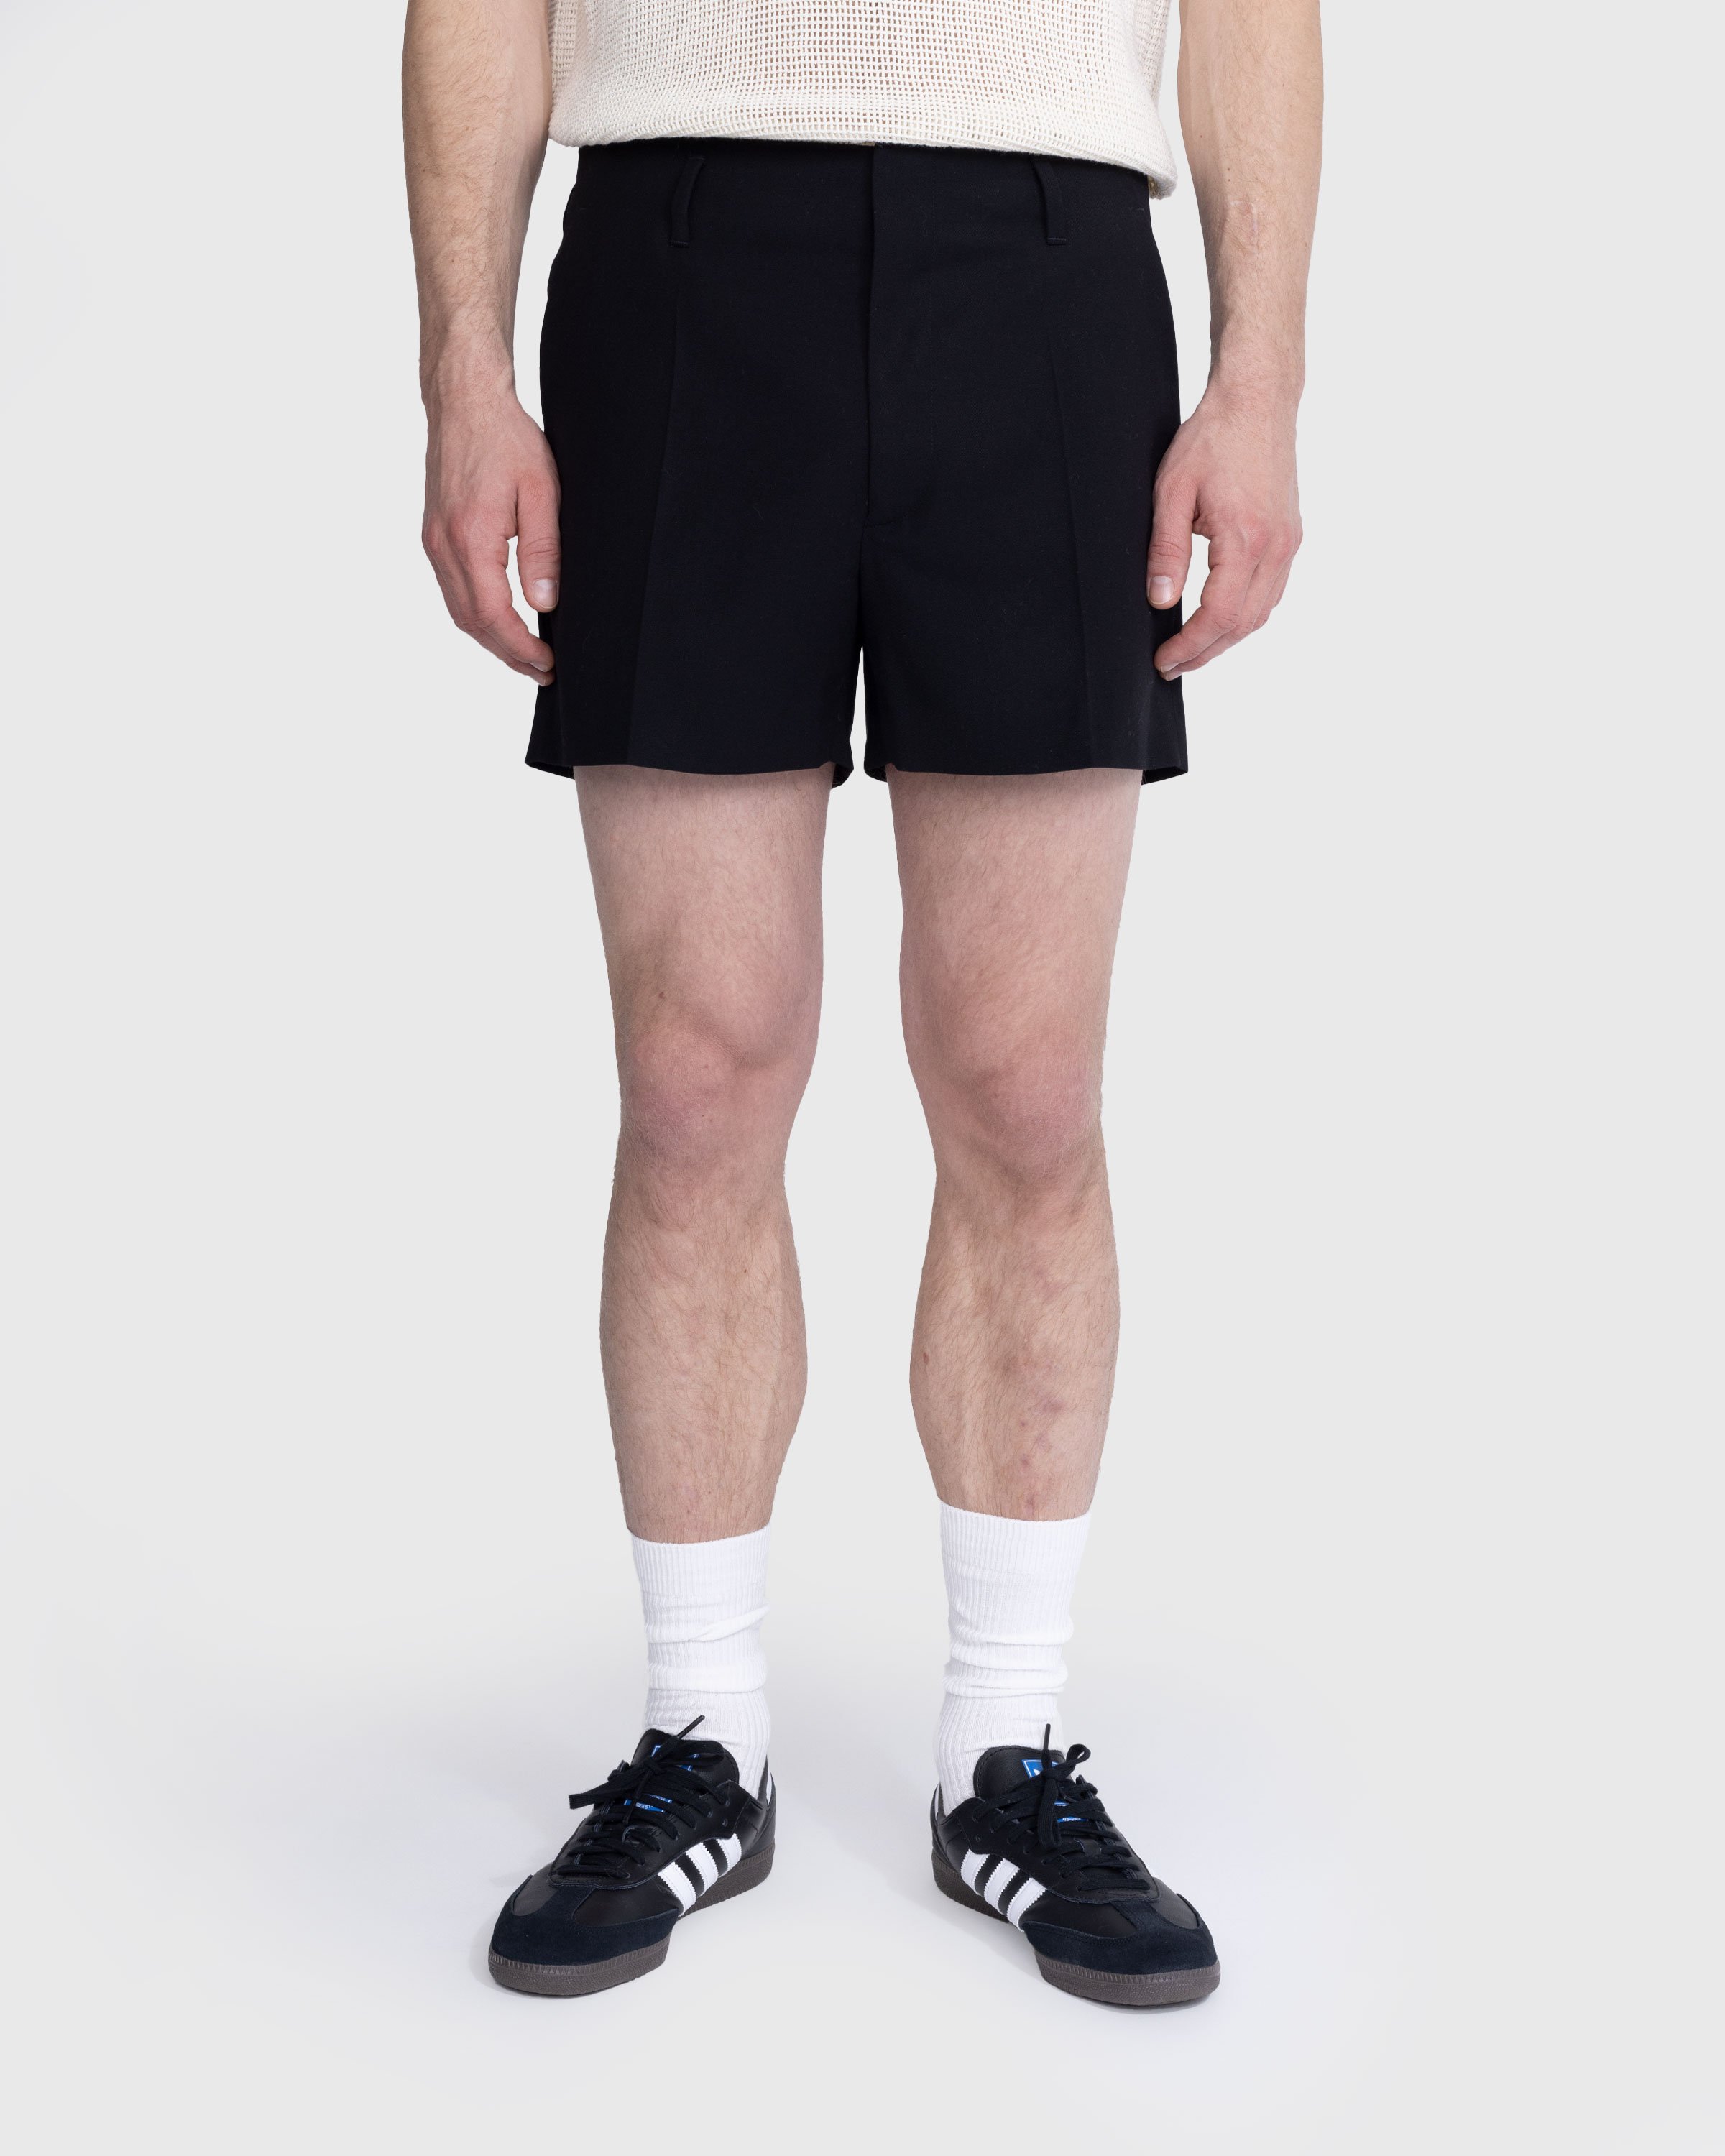 Dries van Noten - Paolo Short Pants Black - Clothing - Black - Image 2